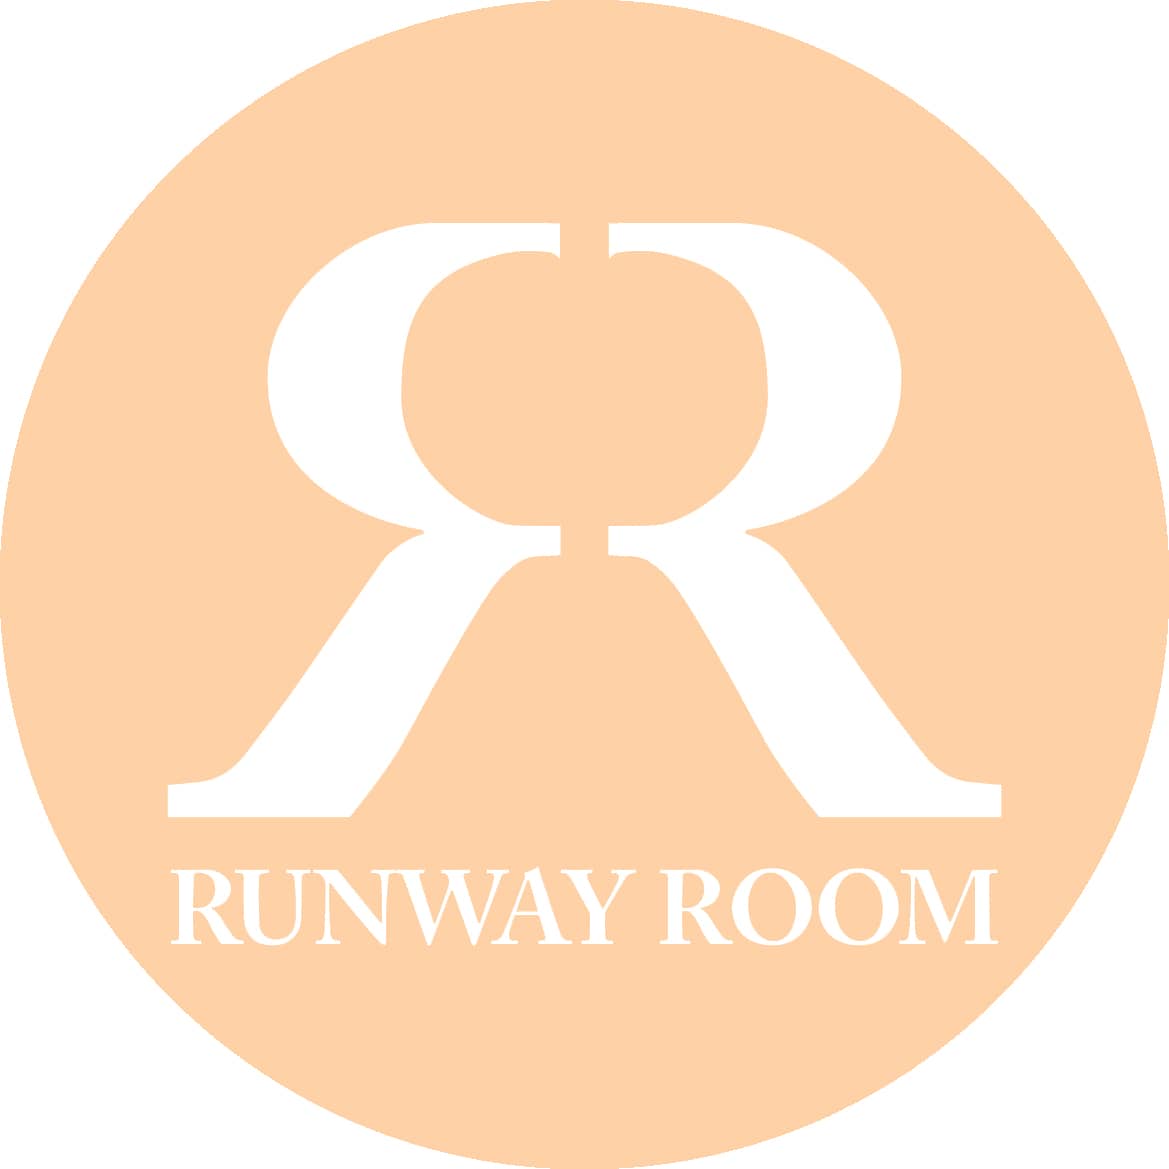 Pastel Orange Logo - Runway Room logo pastel orange Vector file - Variety